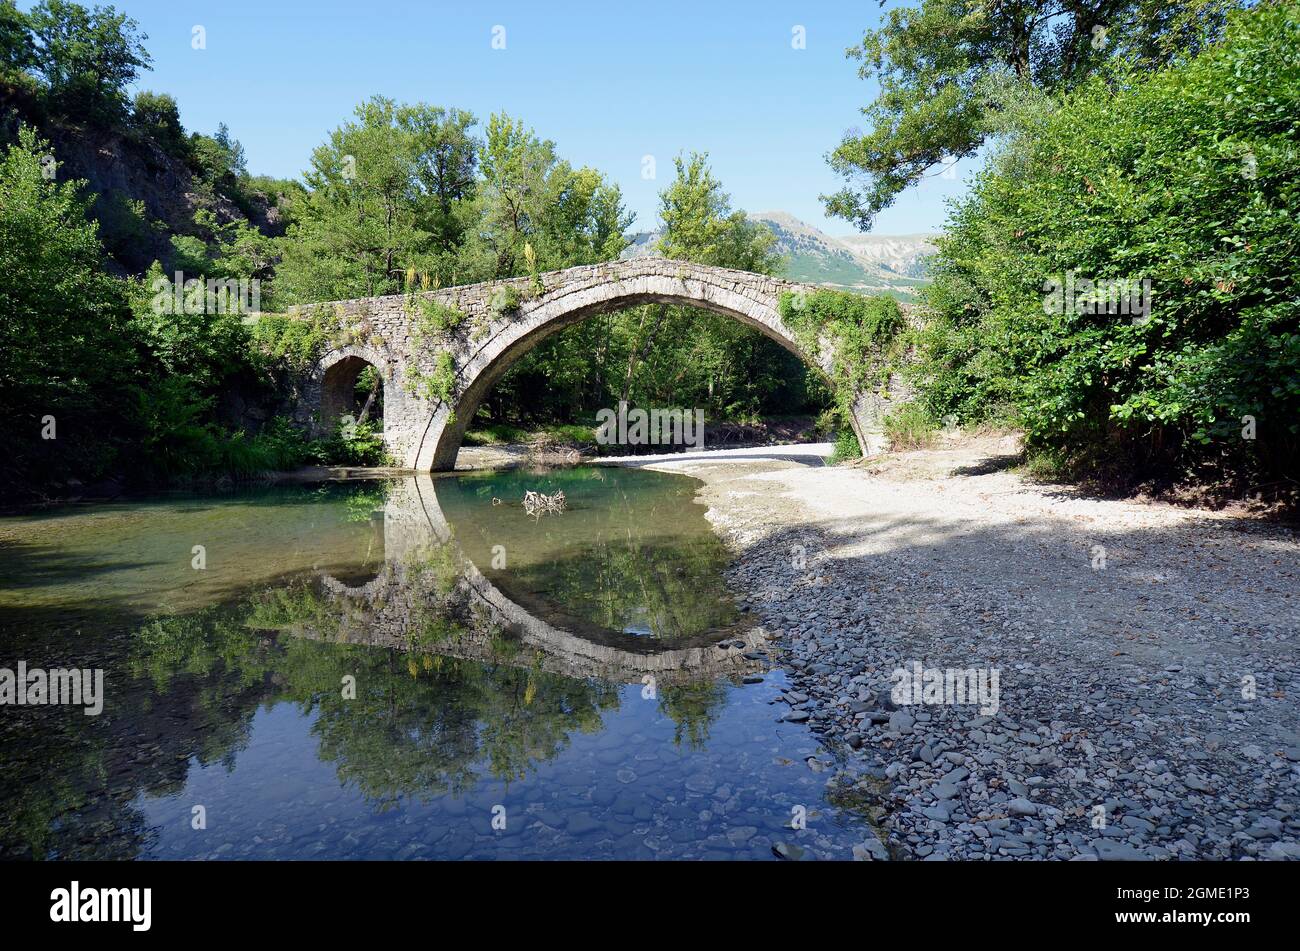 Greece, ancient stone bridge Kamber Aga aka Kamper Aga crossing Zagoritikos river Stock Photo